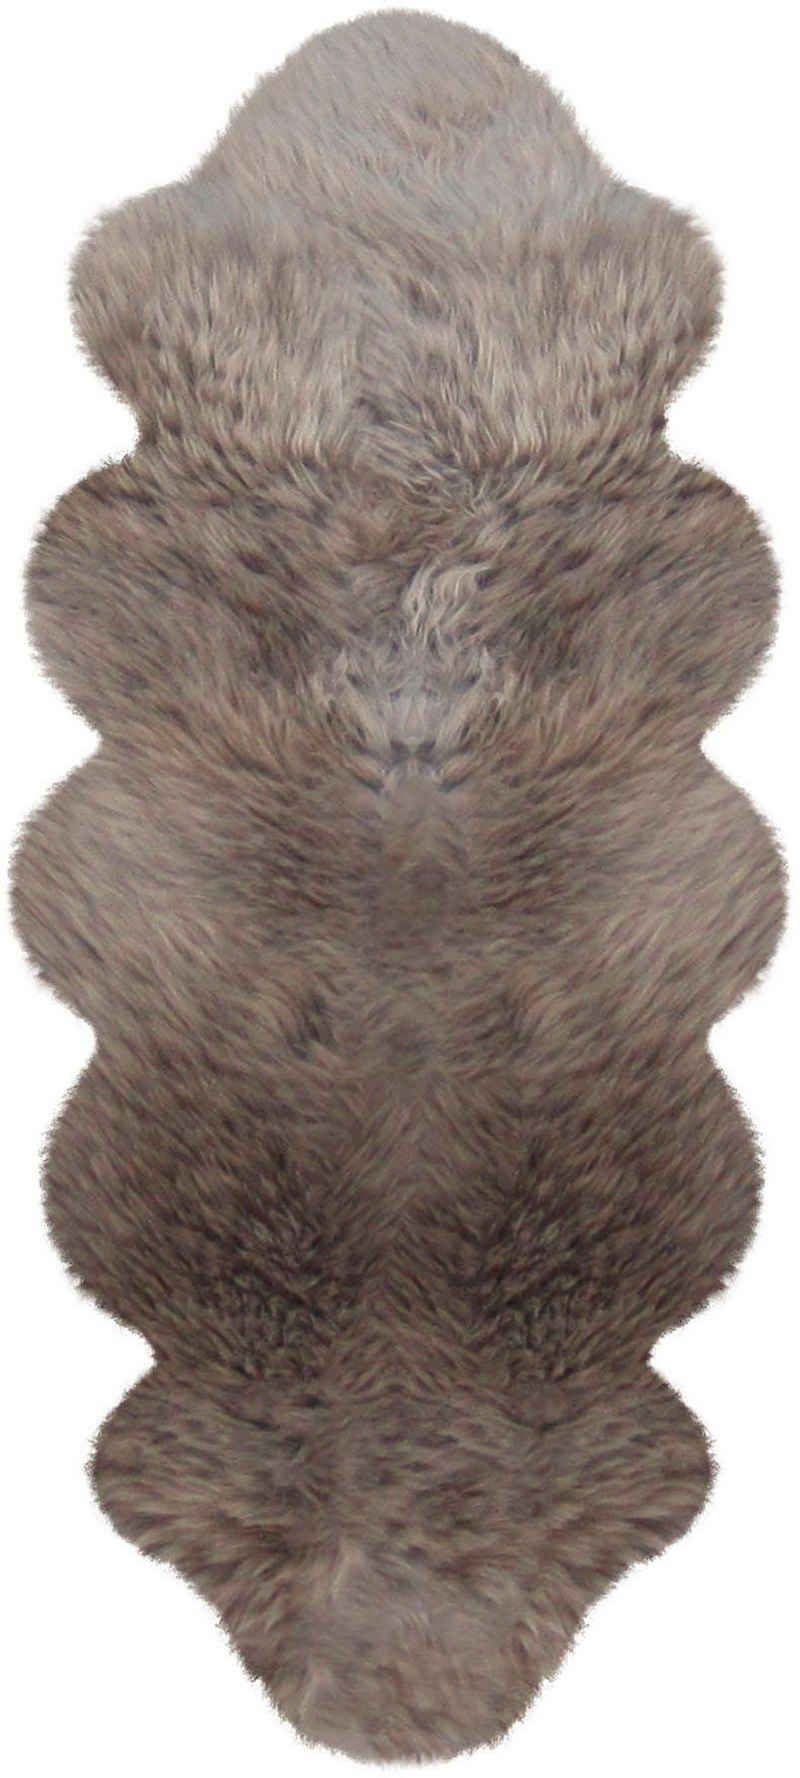 Fellteppich »Doppel-Lammfell«, Heitmann Felle, fellförmig, Höhe 70 mm, echtes Austral. Lammfell, auch als Bettvorleger geeignet, ideal im Schlafzimmer & Wohnzimmer